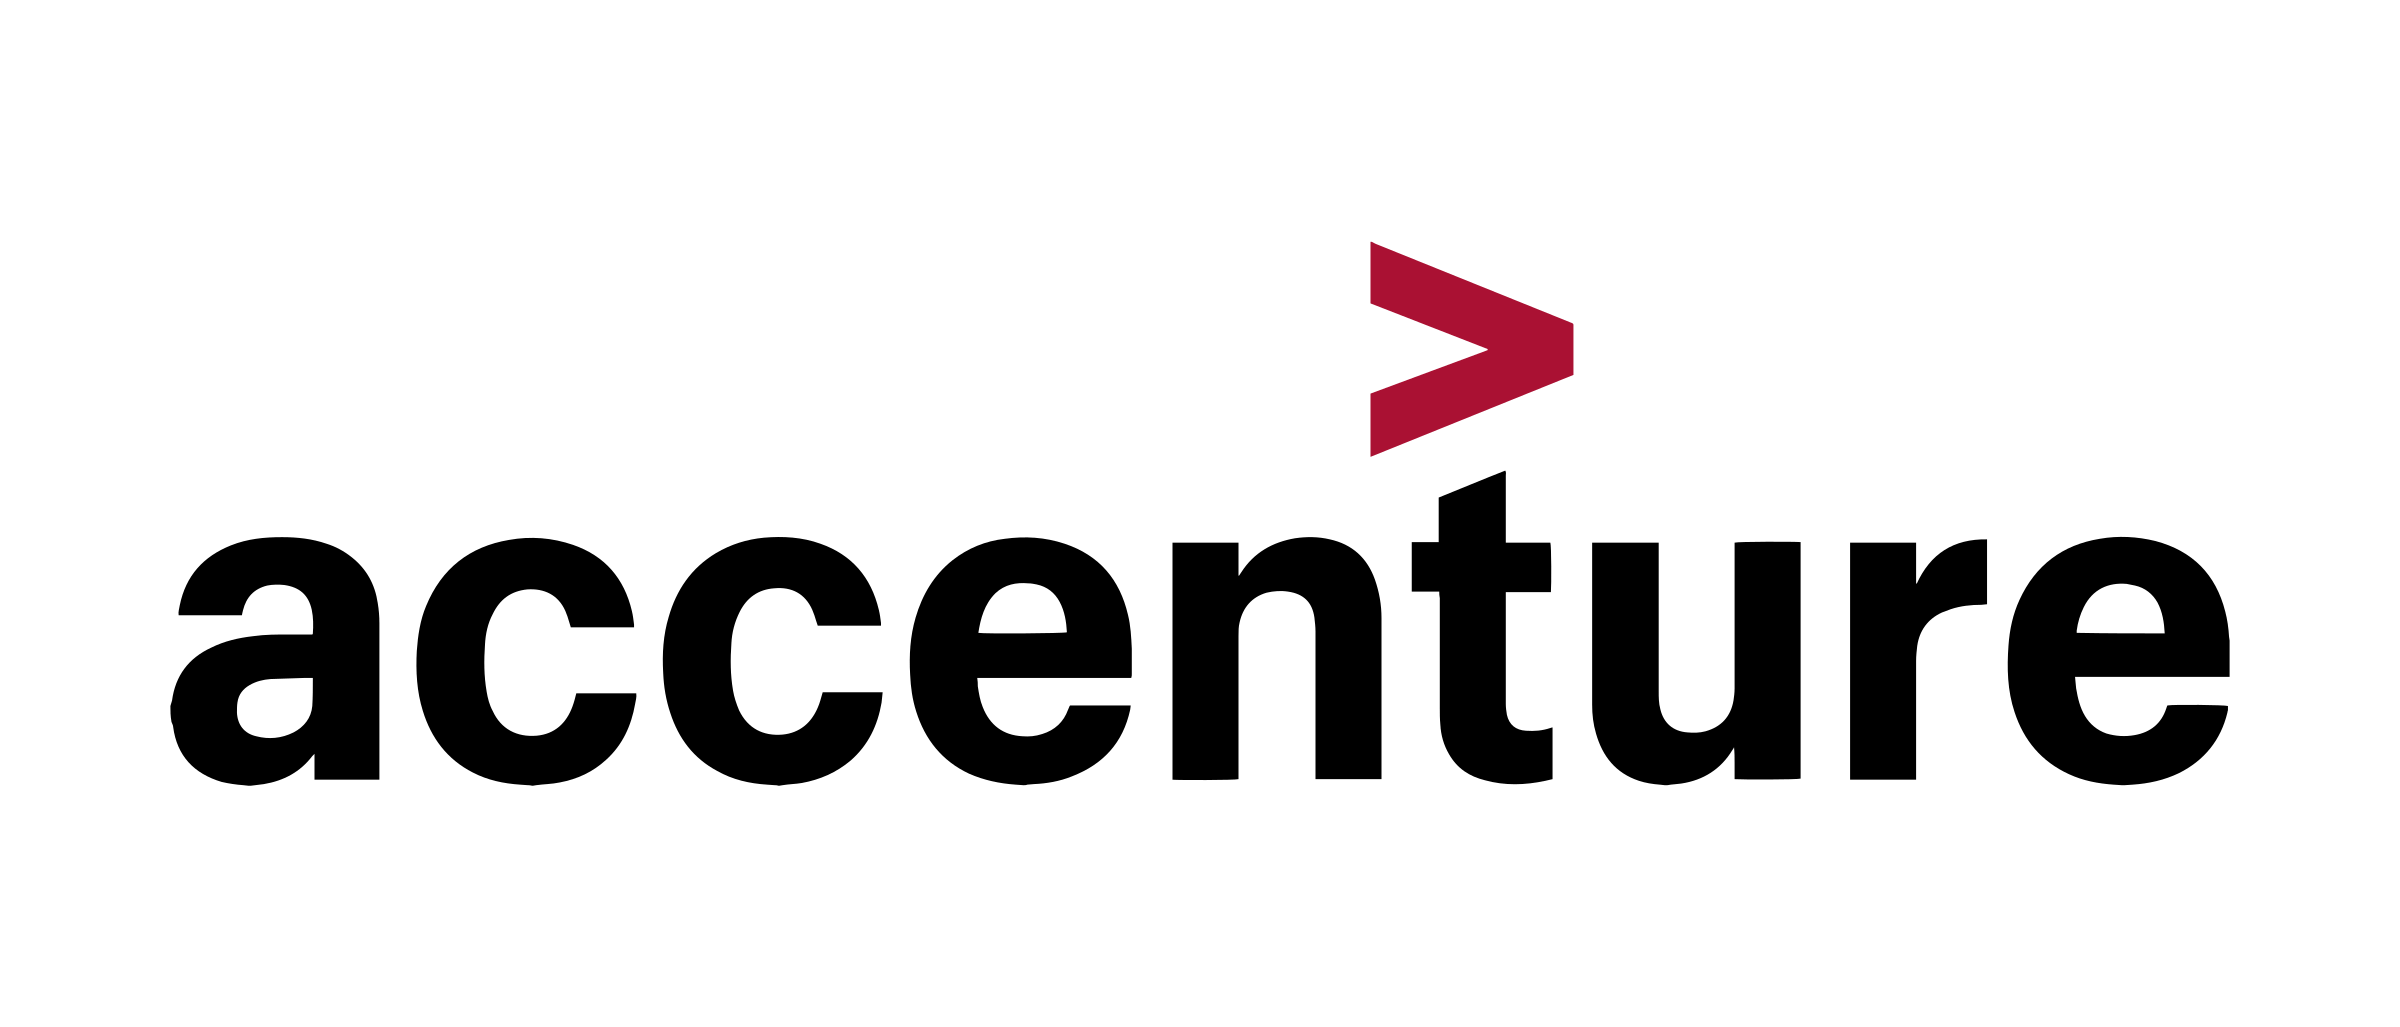 Accenture Logo - Accenture Logo PNG Transparent & SVG Vector - Freebie Supply